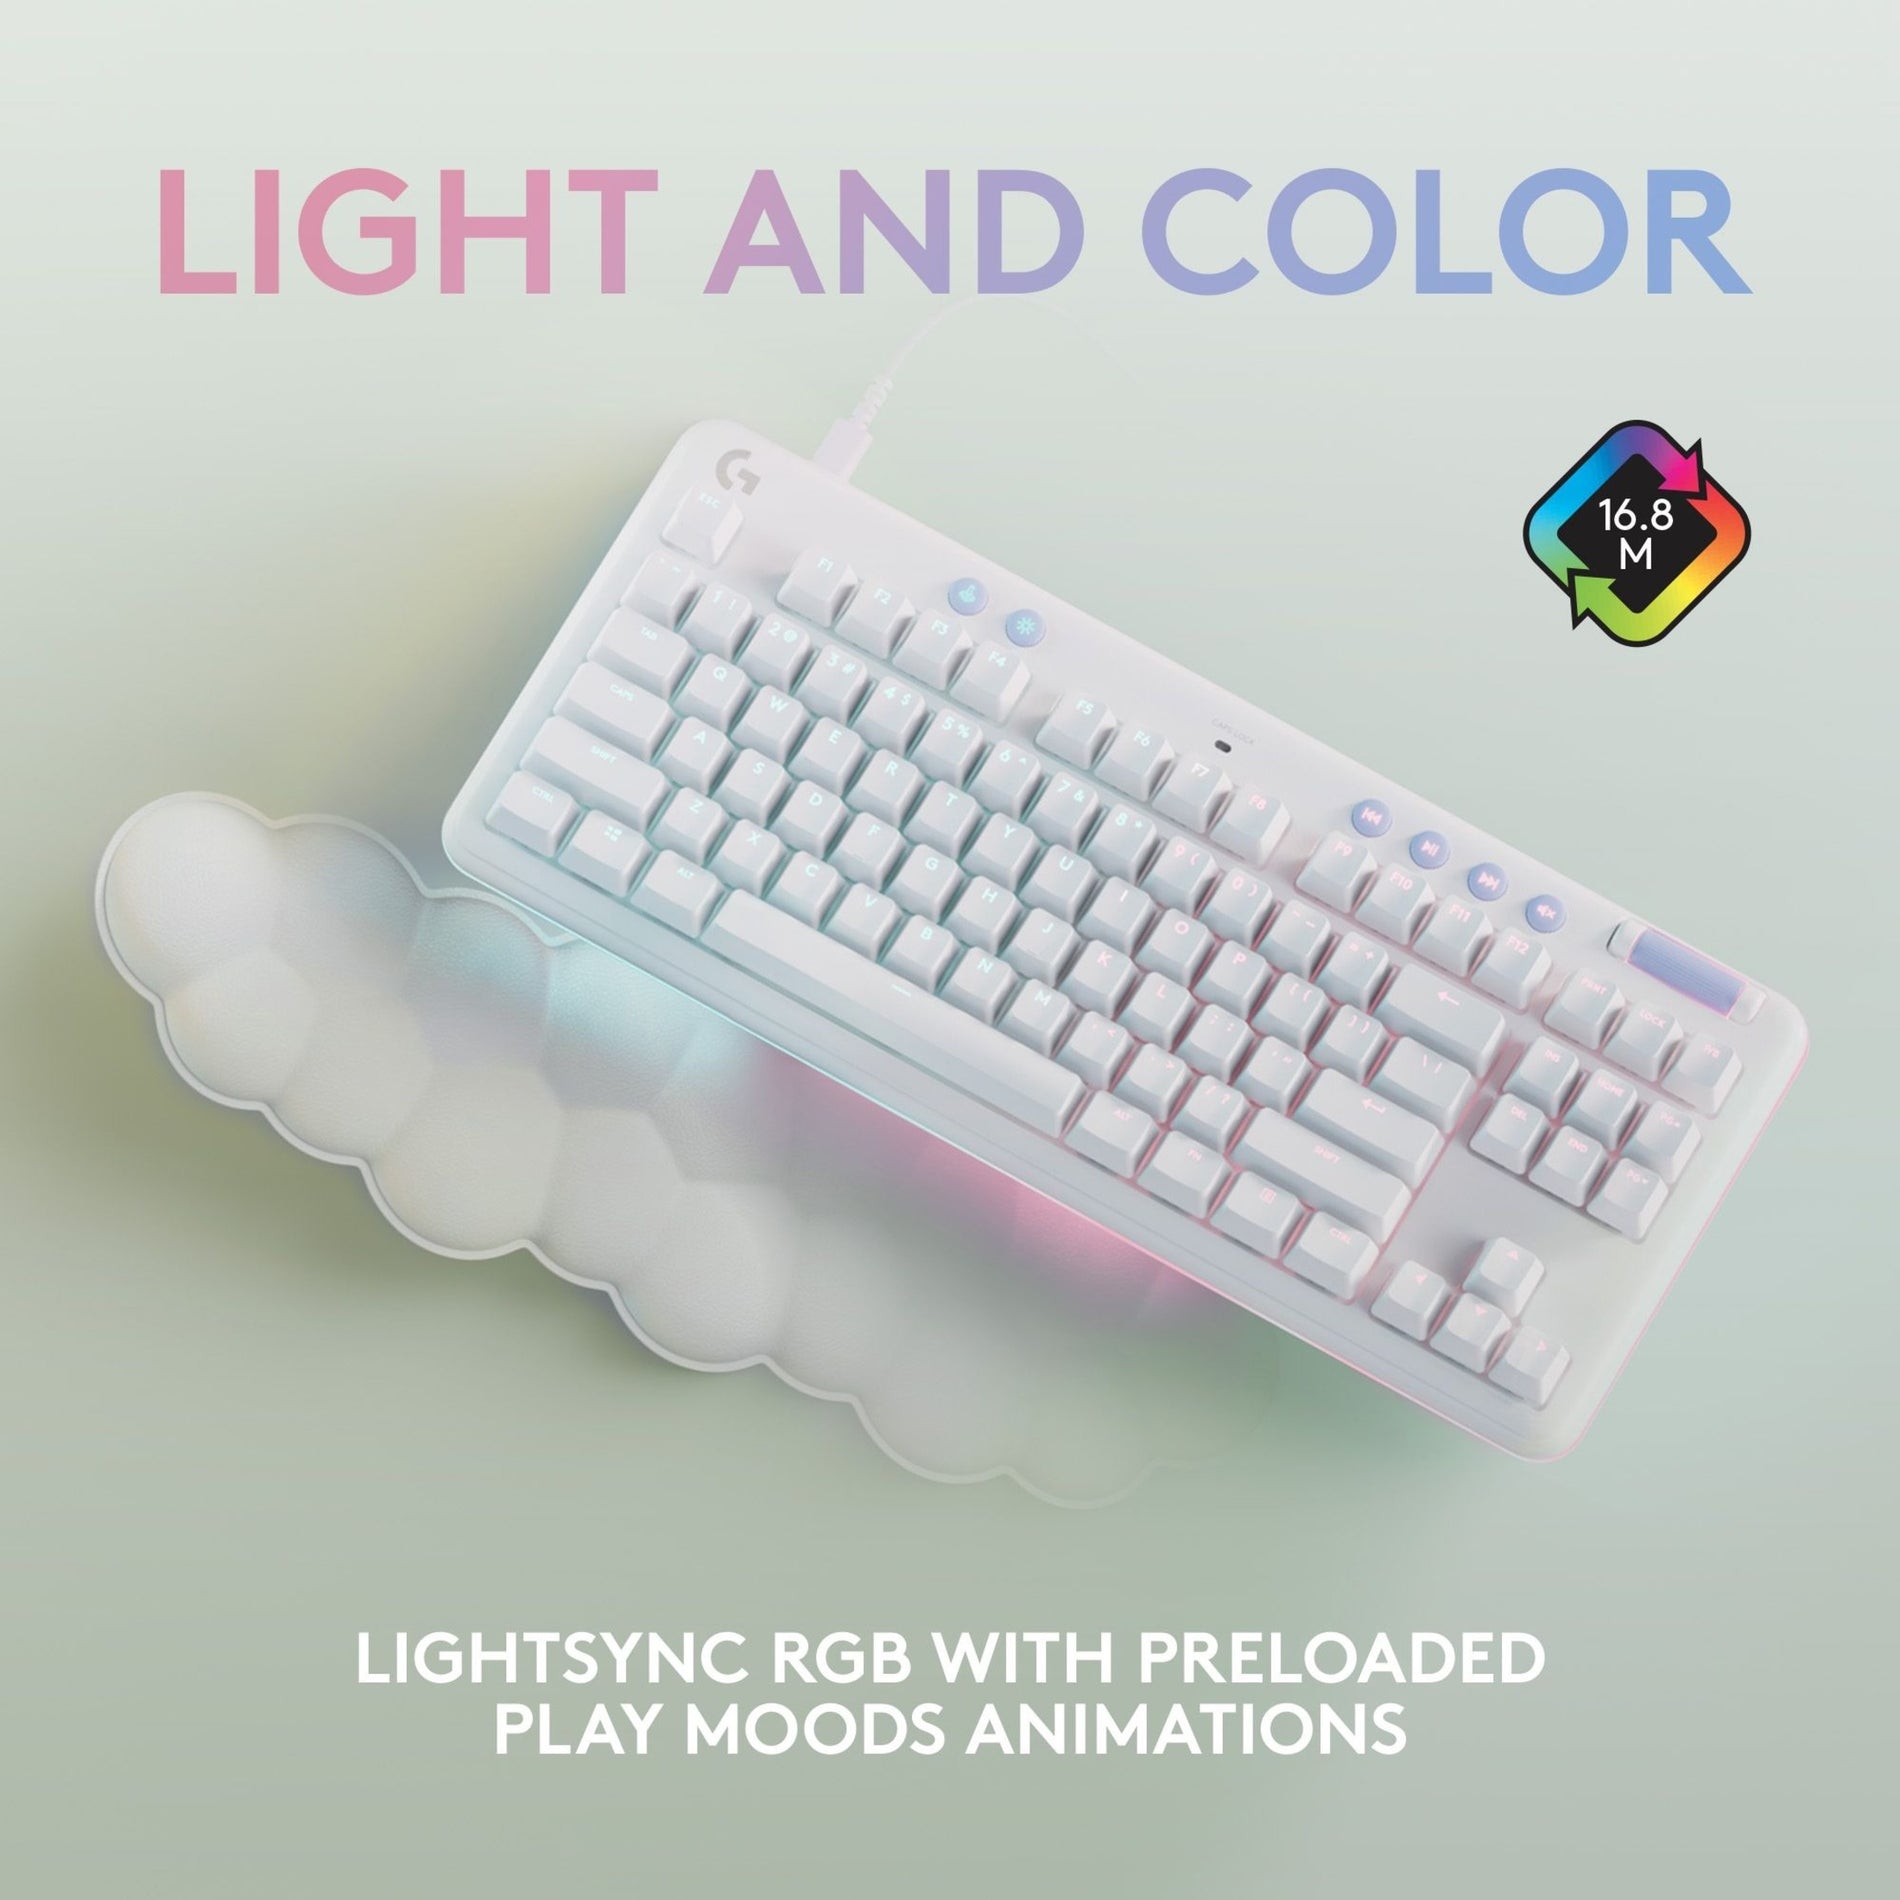 Logitech 920-010670 G713 Gaming Keyboard, RGB LED Backlight, Mechanical Keys, Adjustable Height